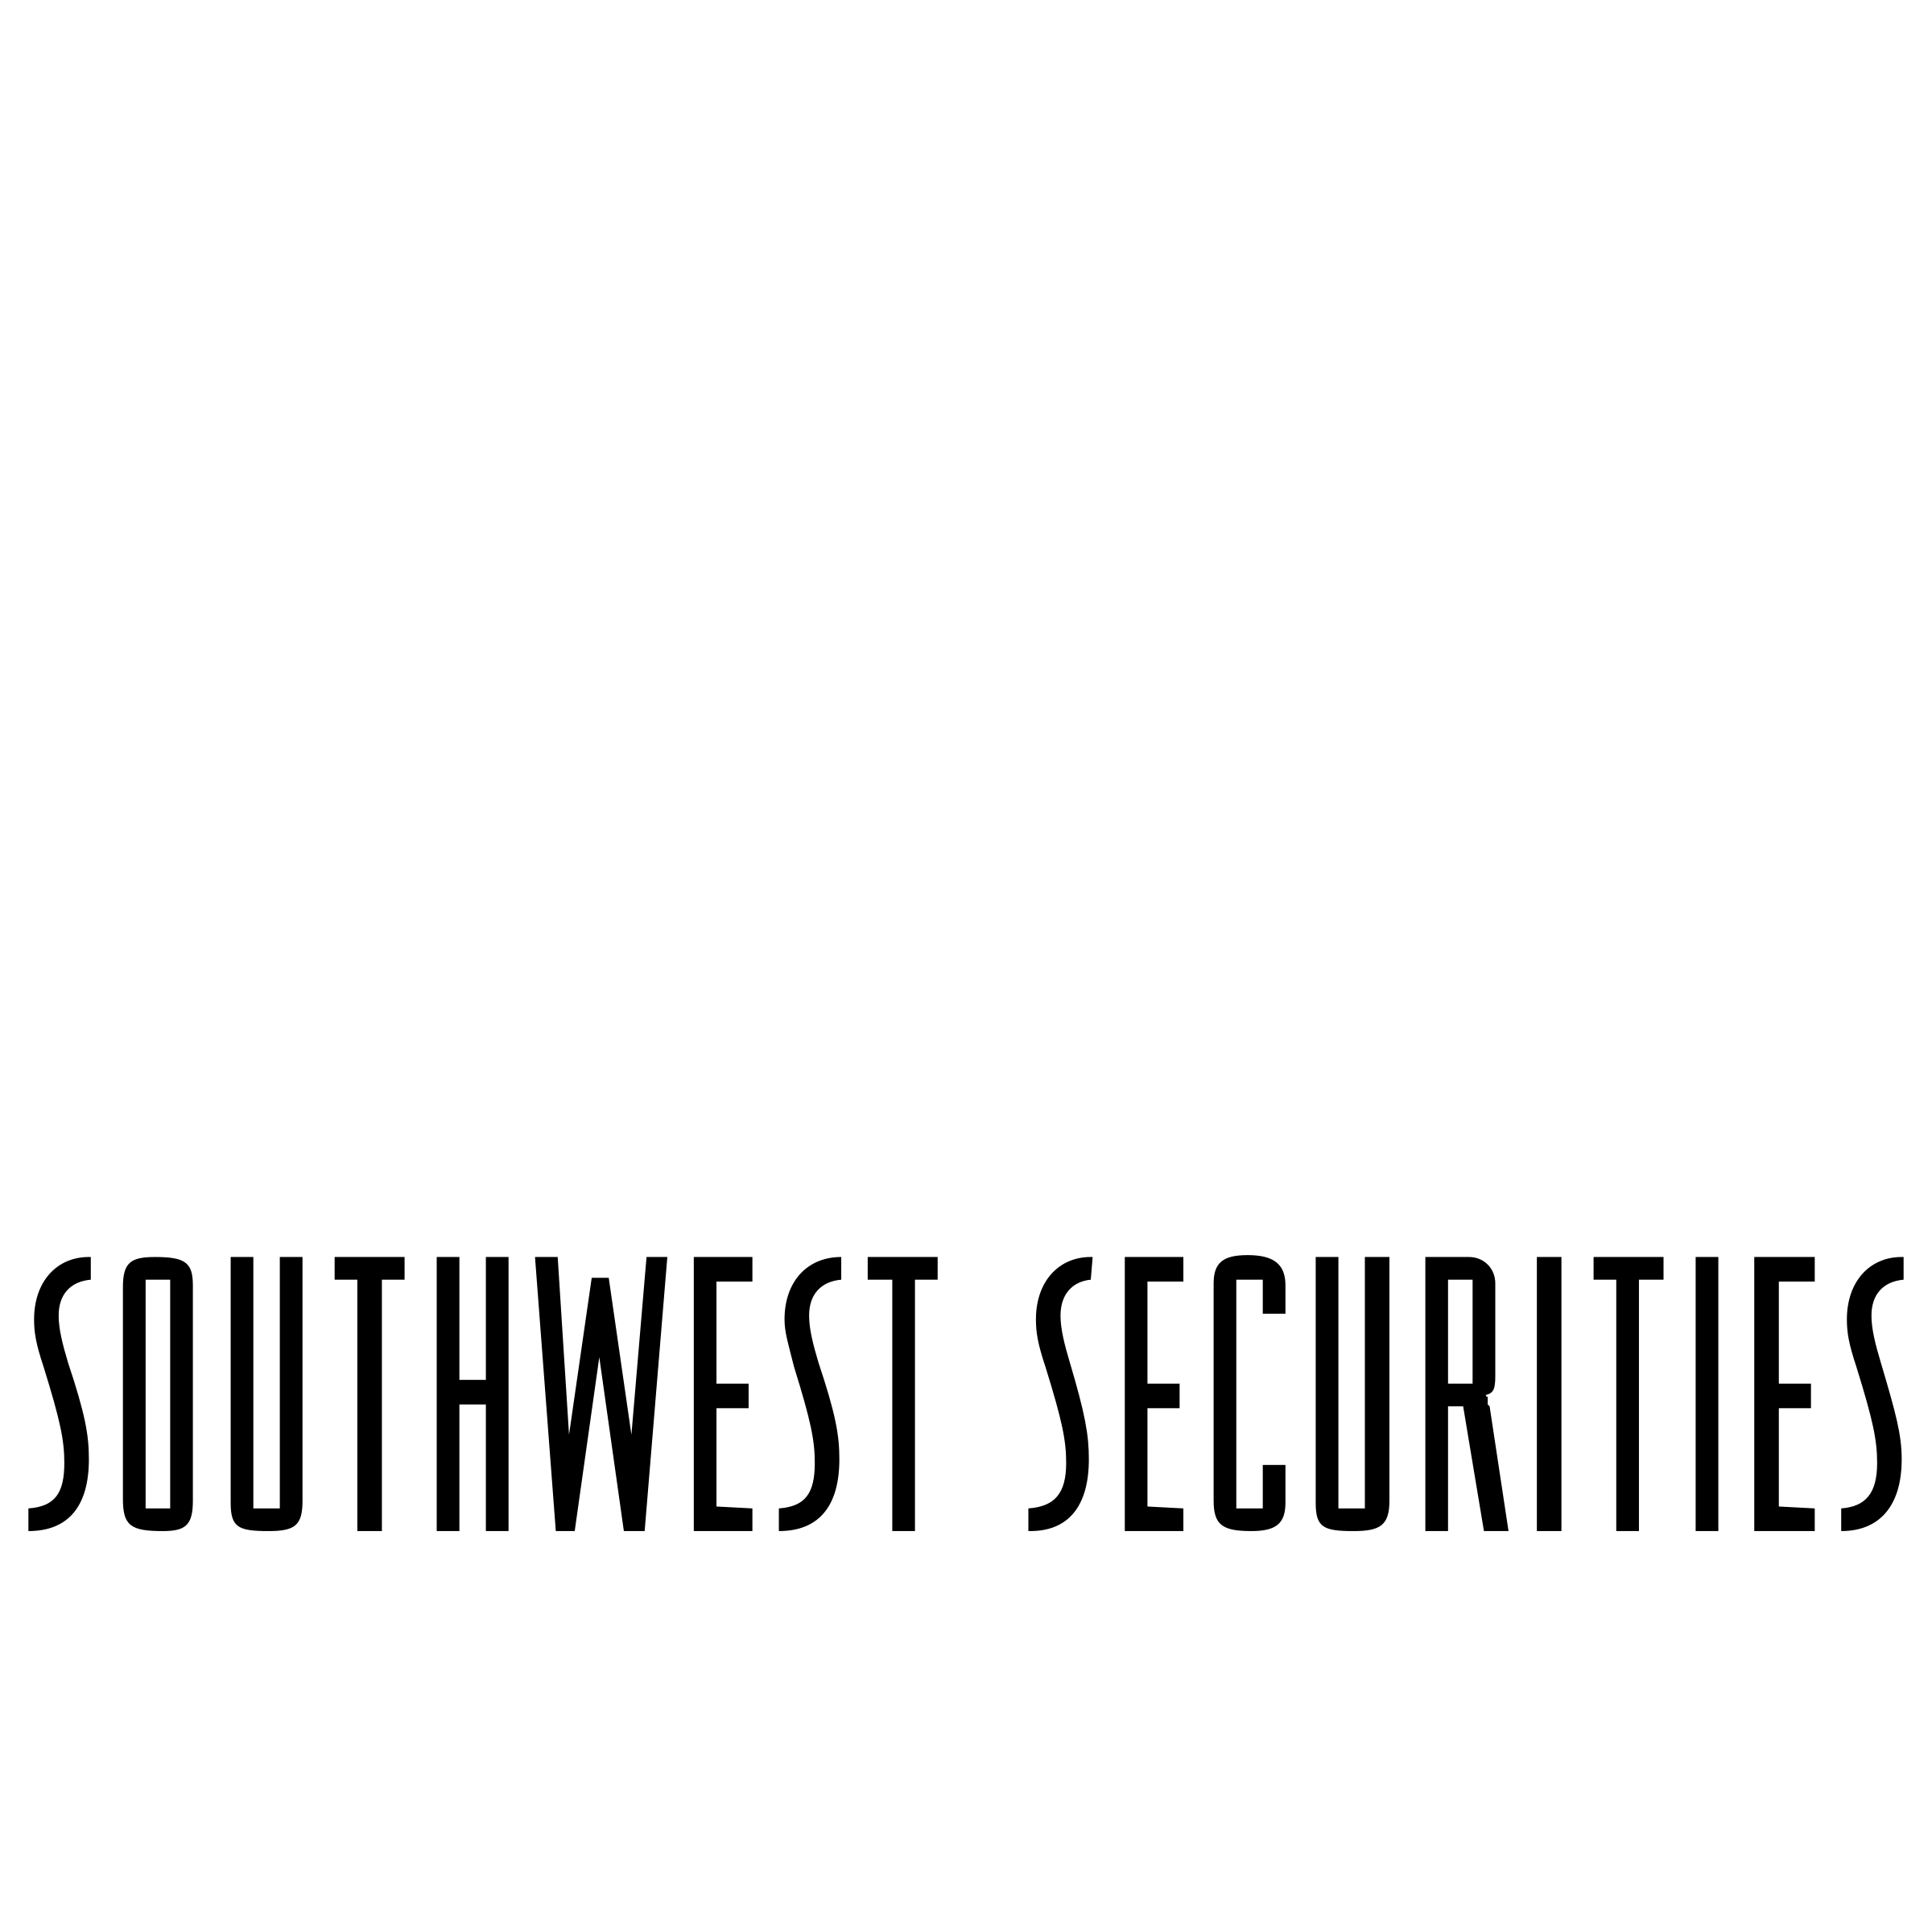 South West Securities Logo - Southwest Securities Logo PNG Transparent & SVG Vector